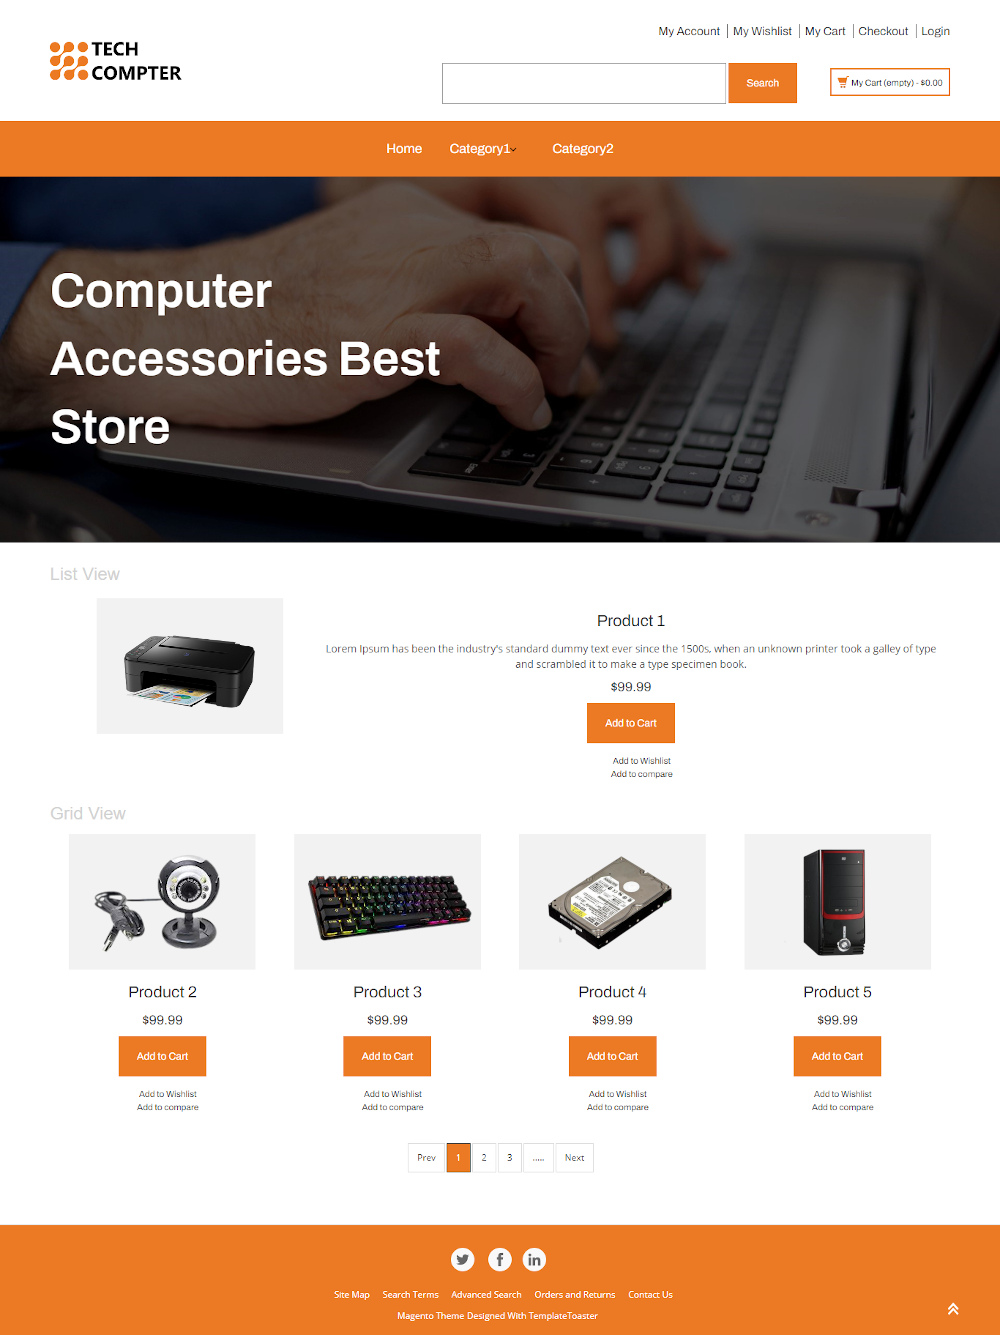 Tech Computer - Online Computer Accessories Store Magento Theme